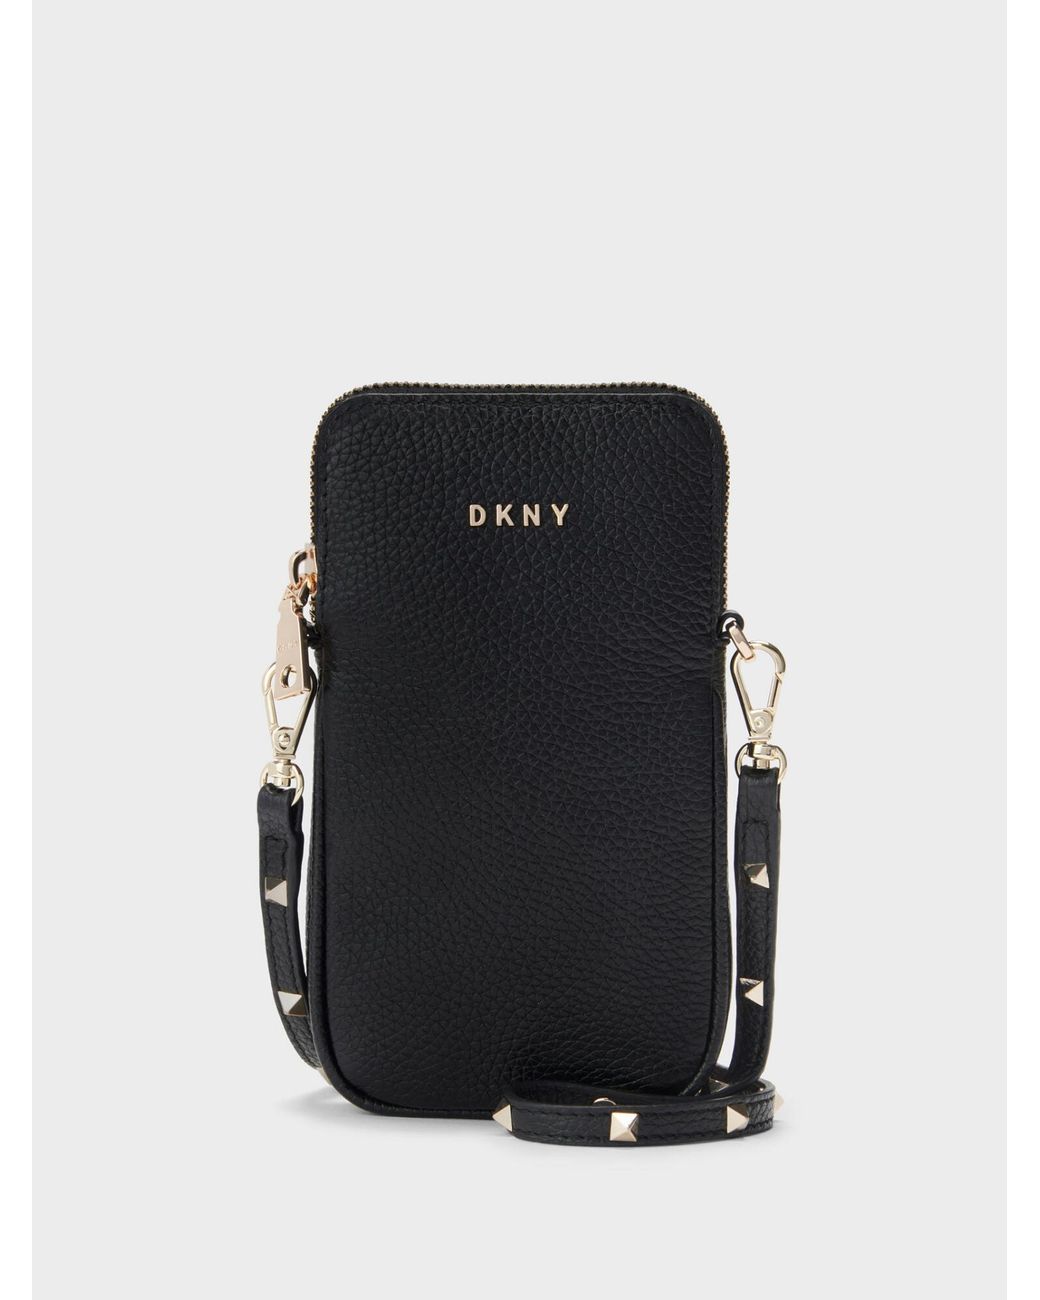 DKNY Stud Strap Phone Crossbody in Black/Gold (Black) | Lyst